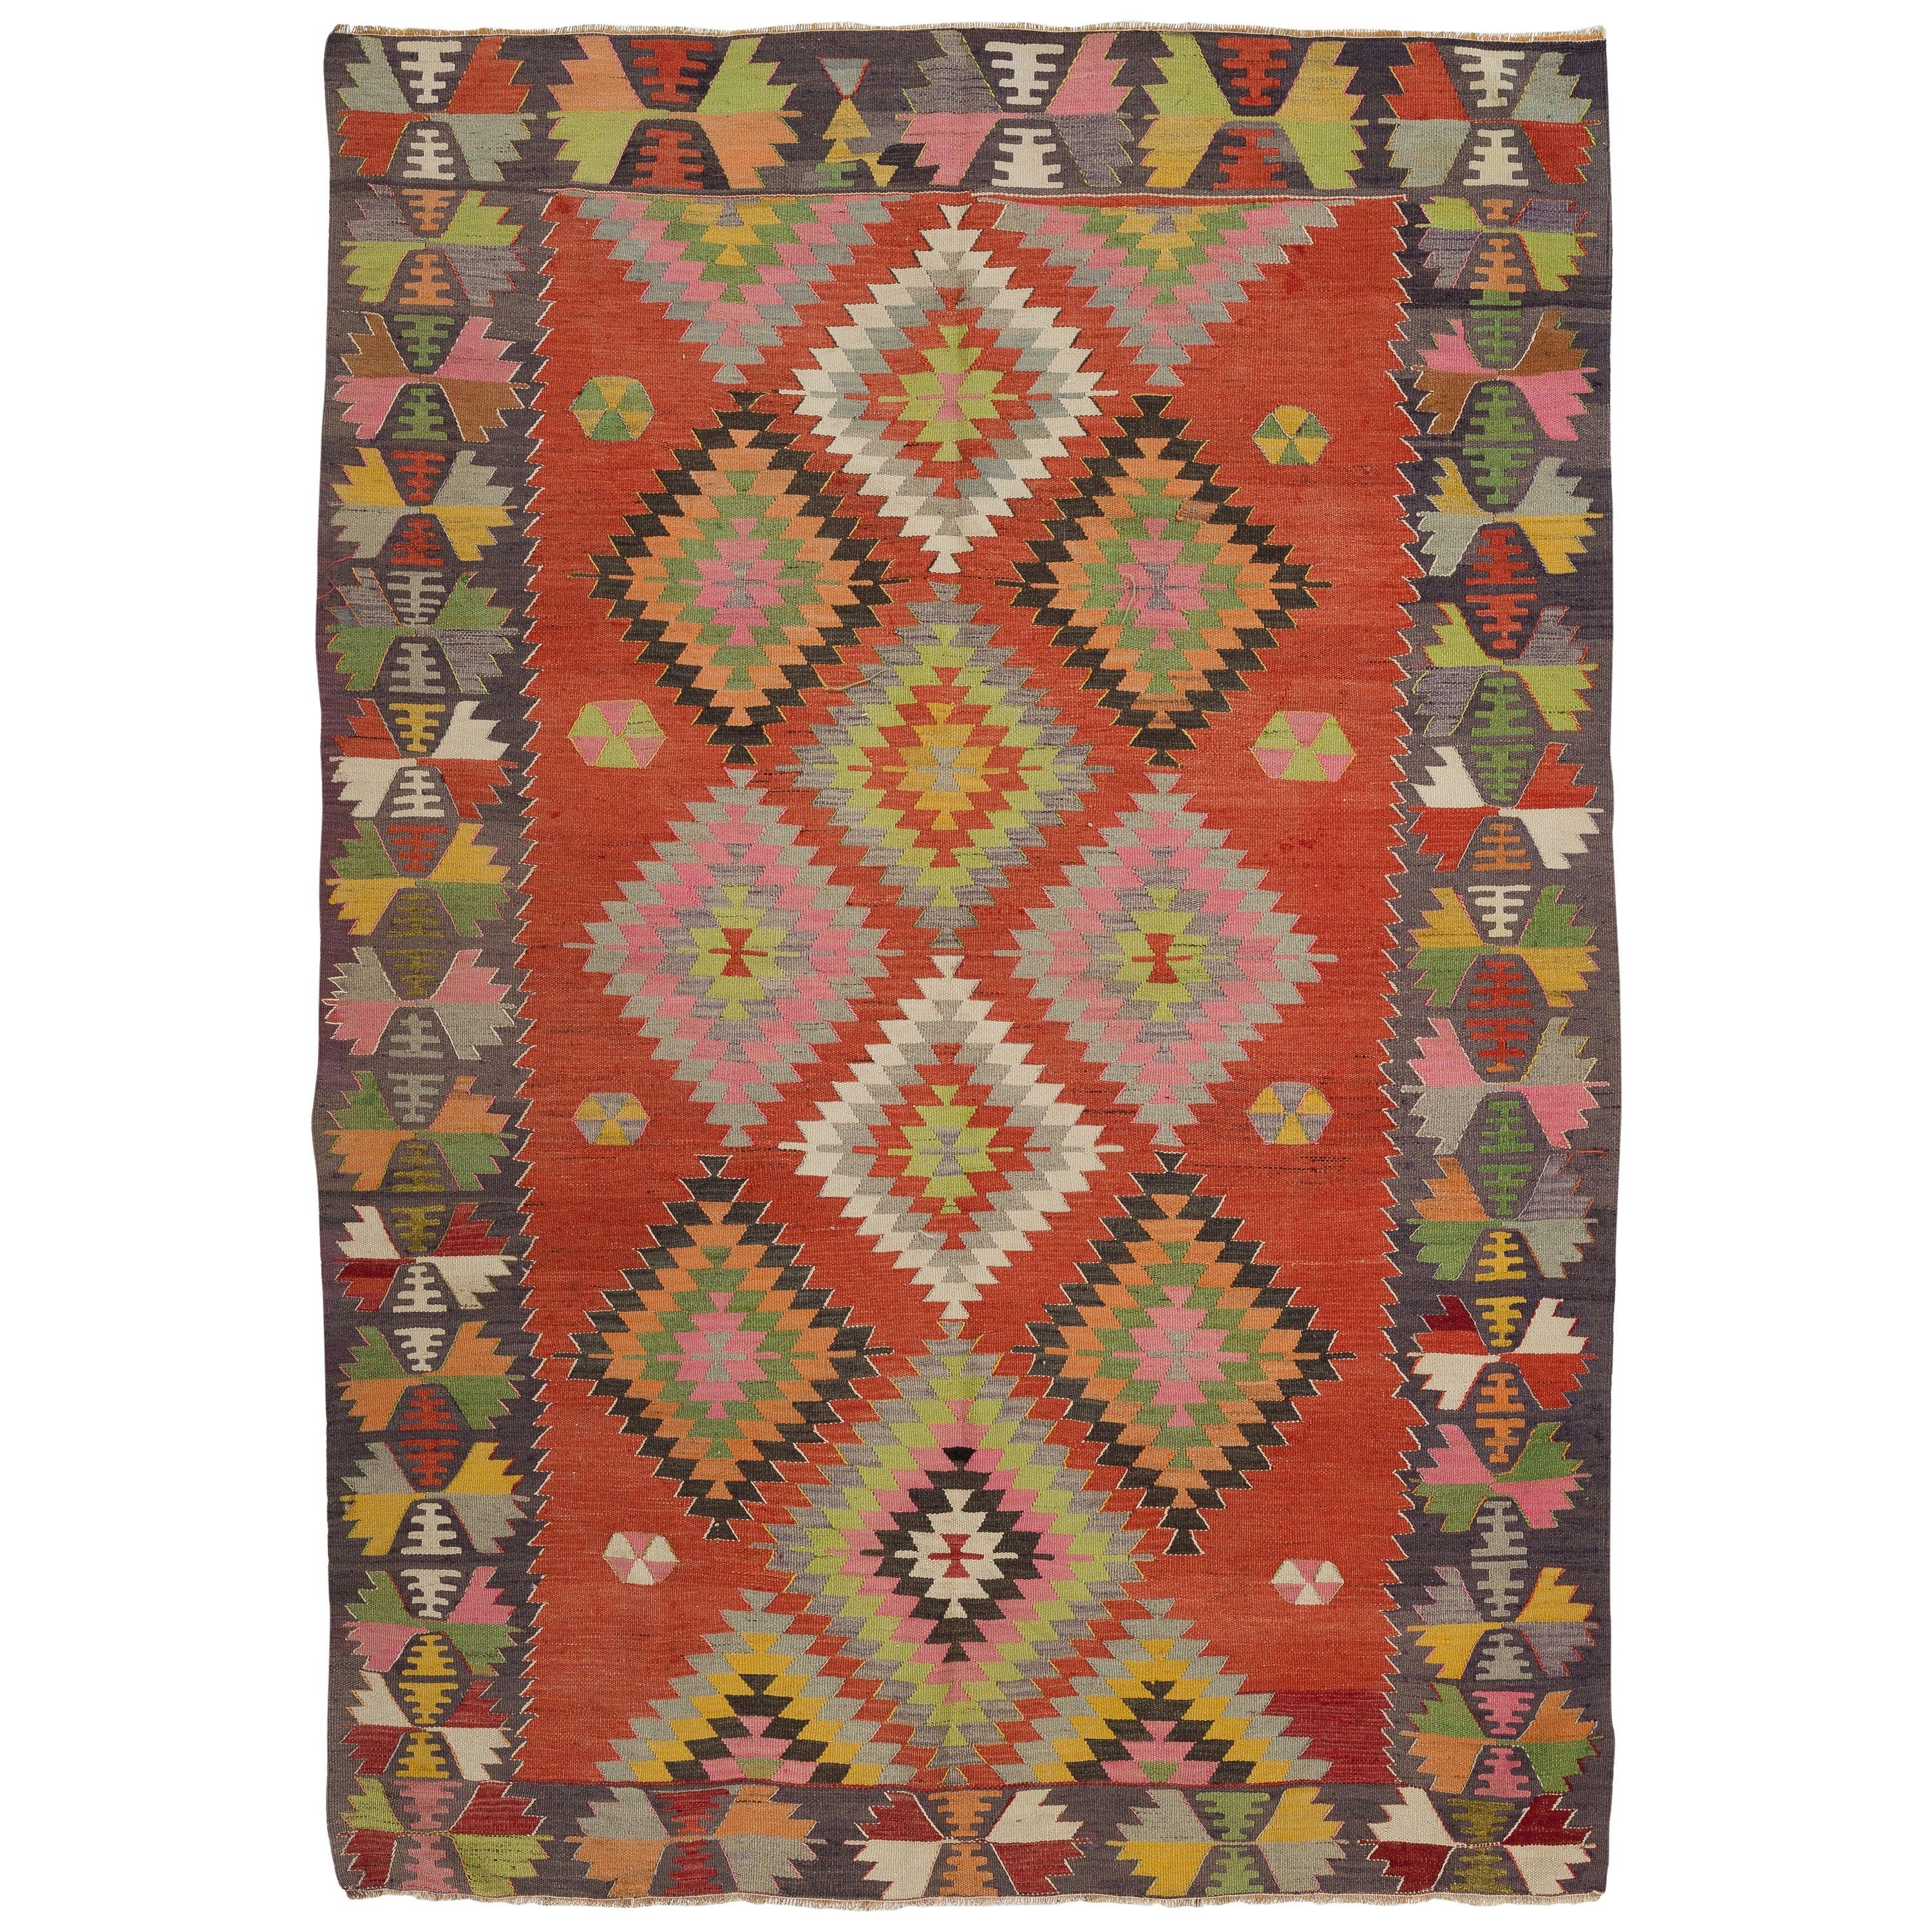 5.5x8 Ft Handwoven Vintage Anatolian Kilim, Geometric Wool Rug for Home Decor